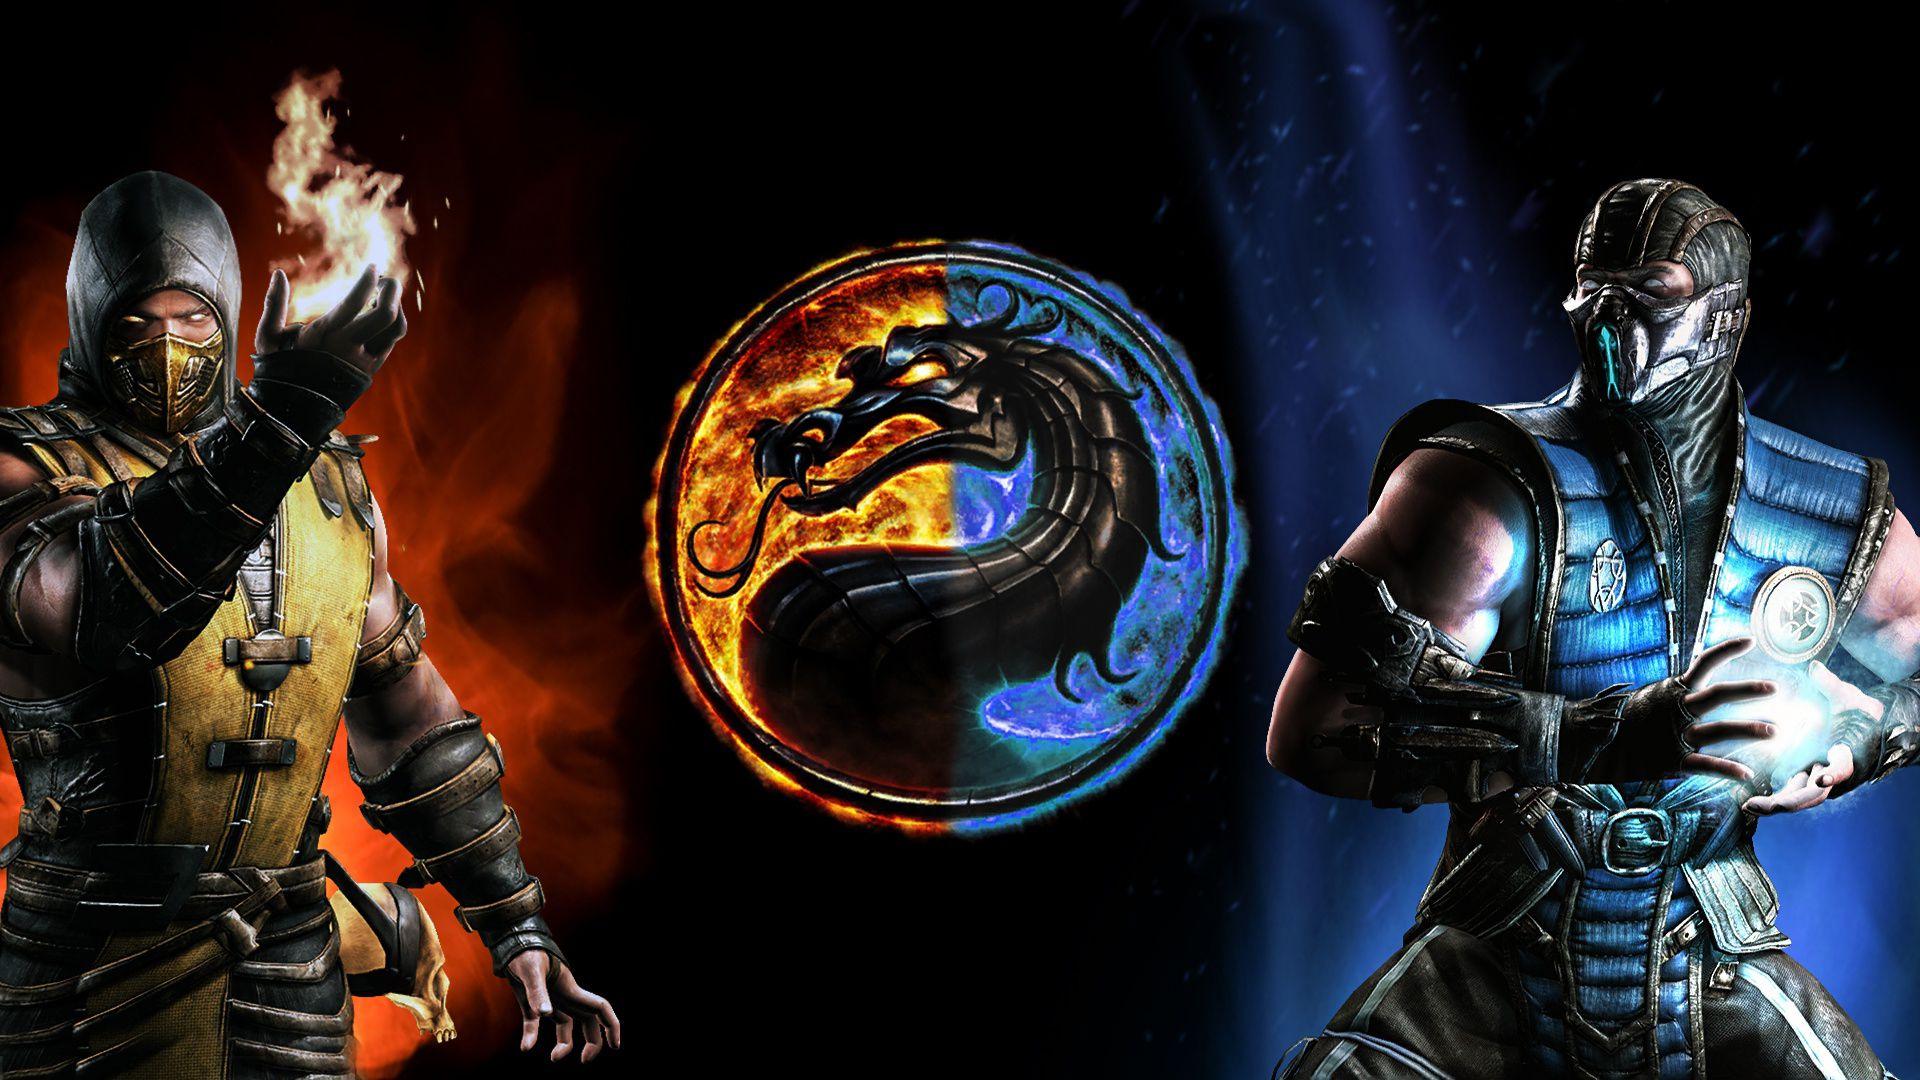 Mortal Kombat Scorpion Vs Sub Zero Wallpapers - Wallpaper Cave